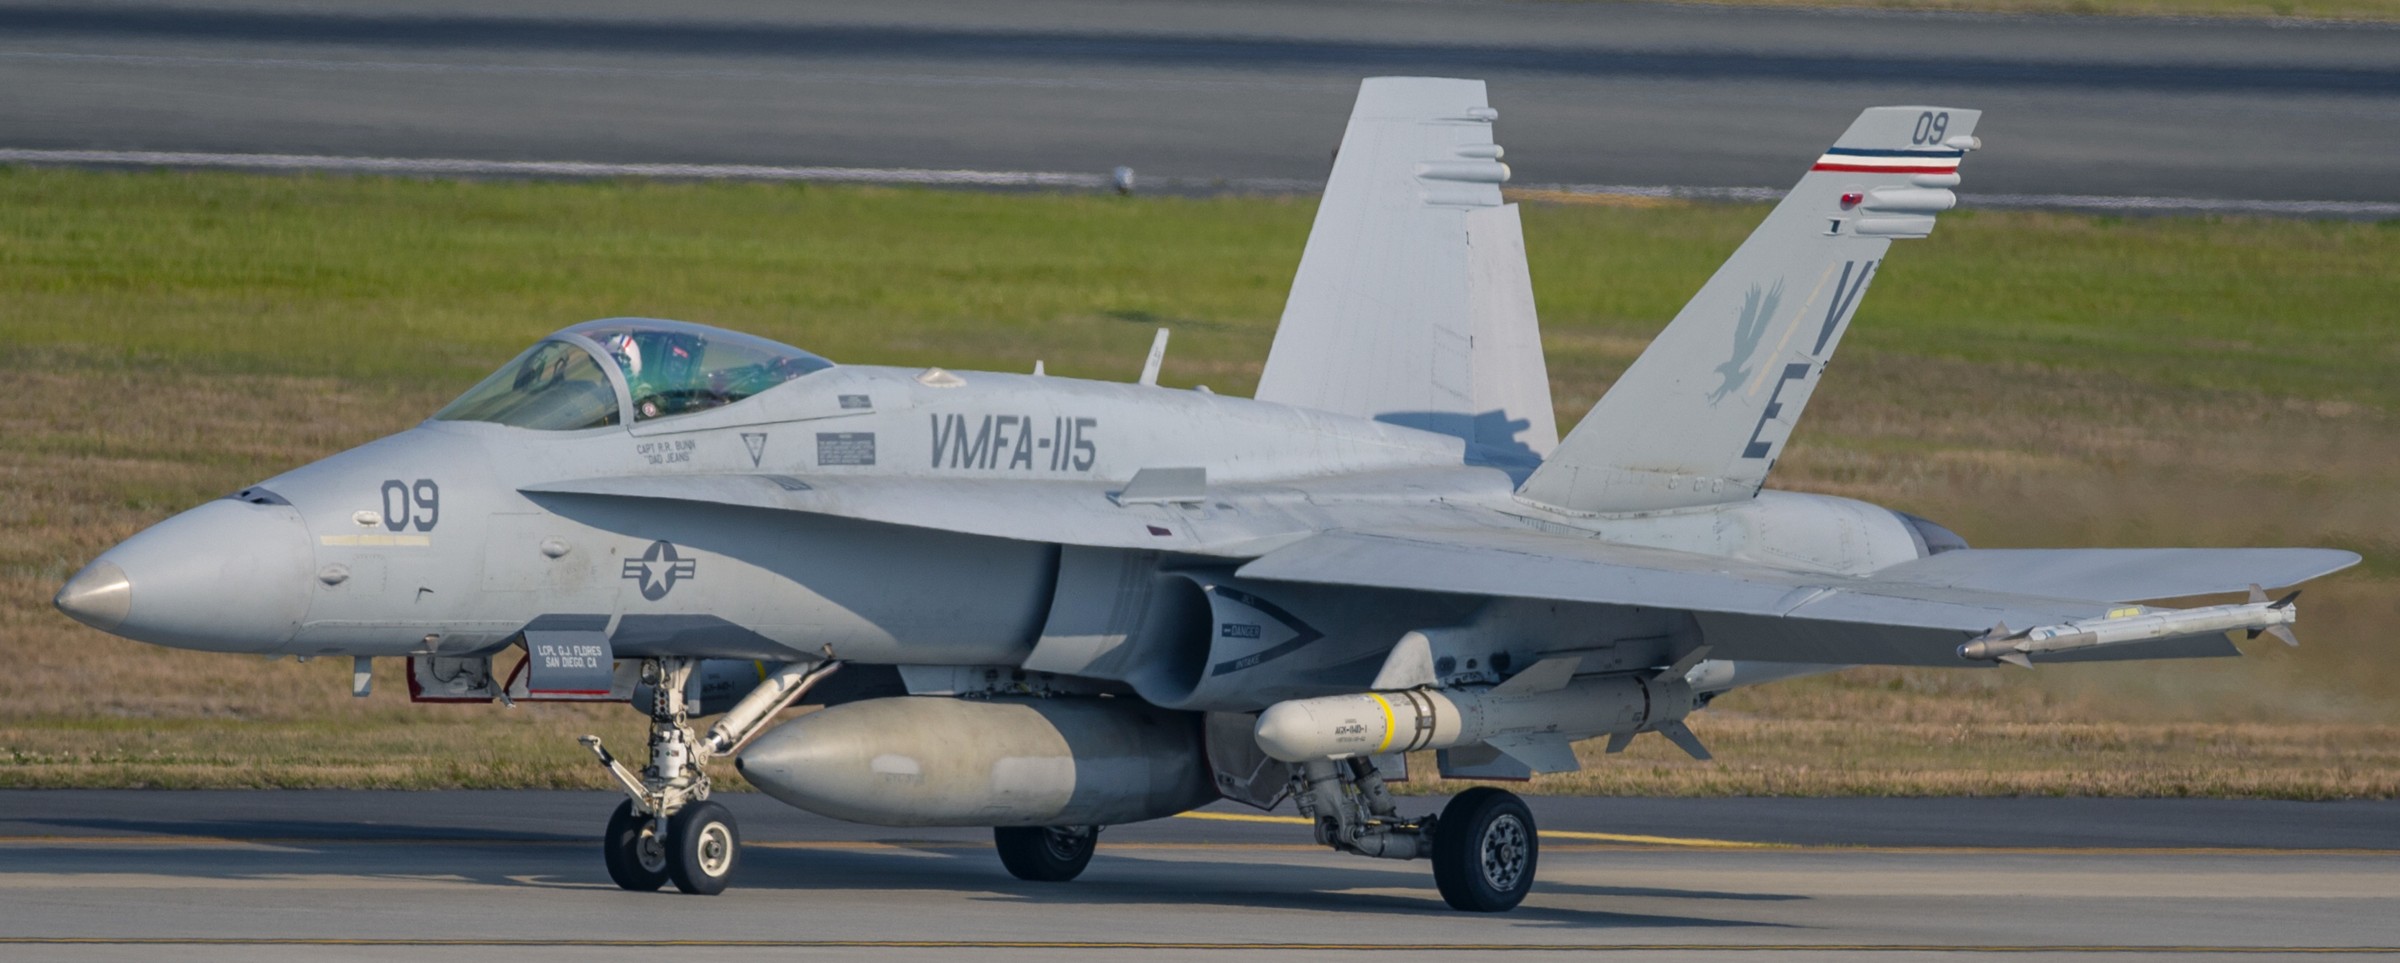 vmfa-115 silver eagles marine fighter attack squadron usmc f/a-18c hornet 189 agm-84d harpoon missile